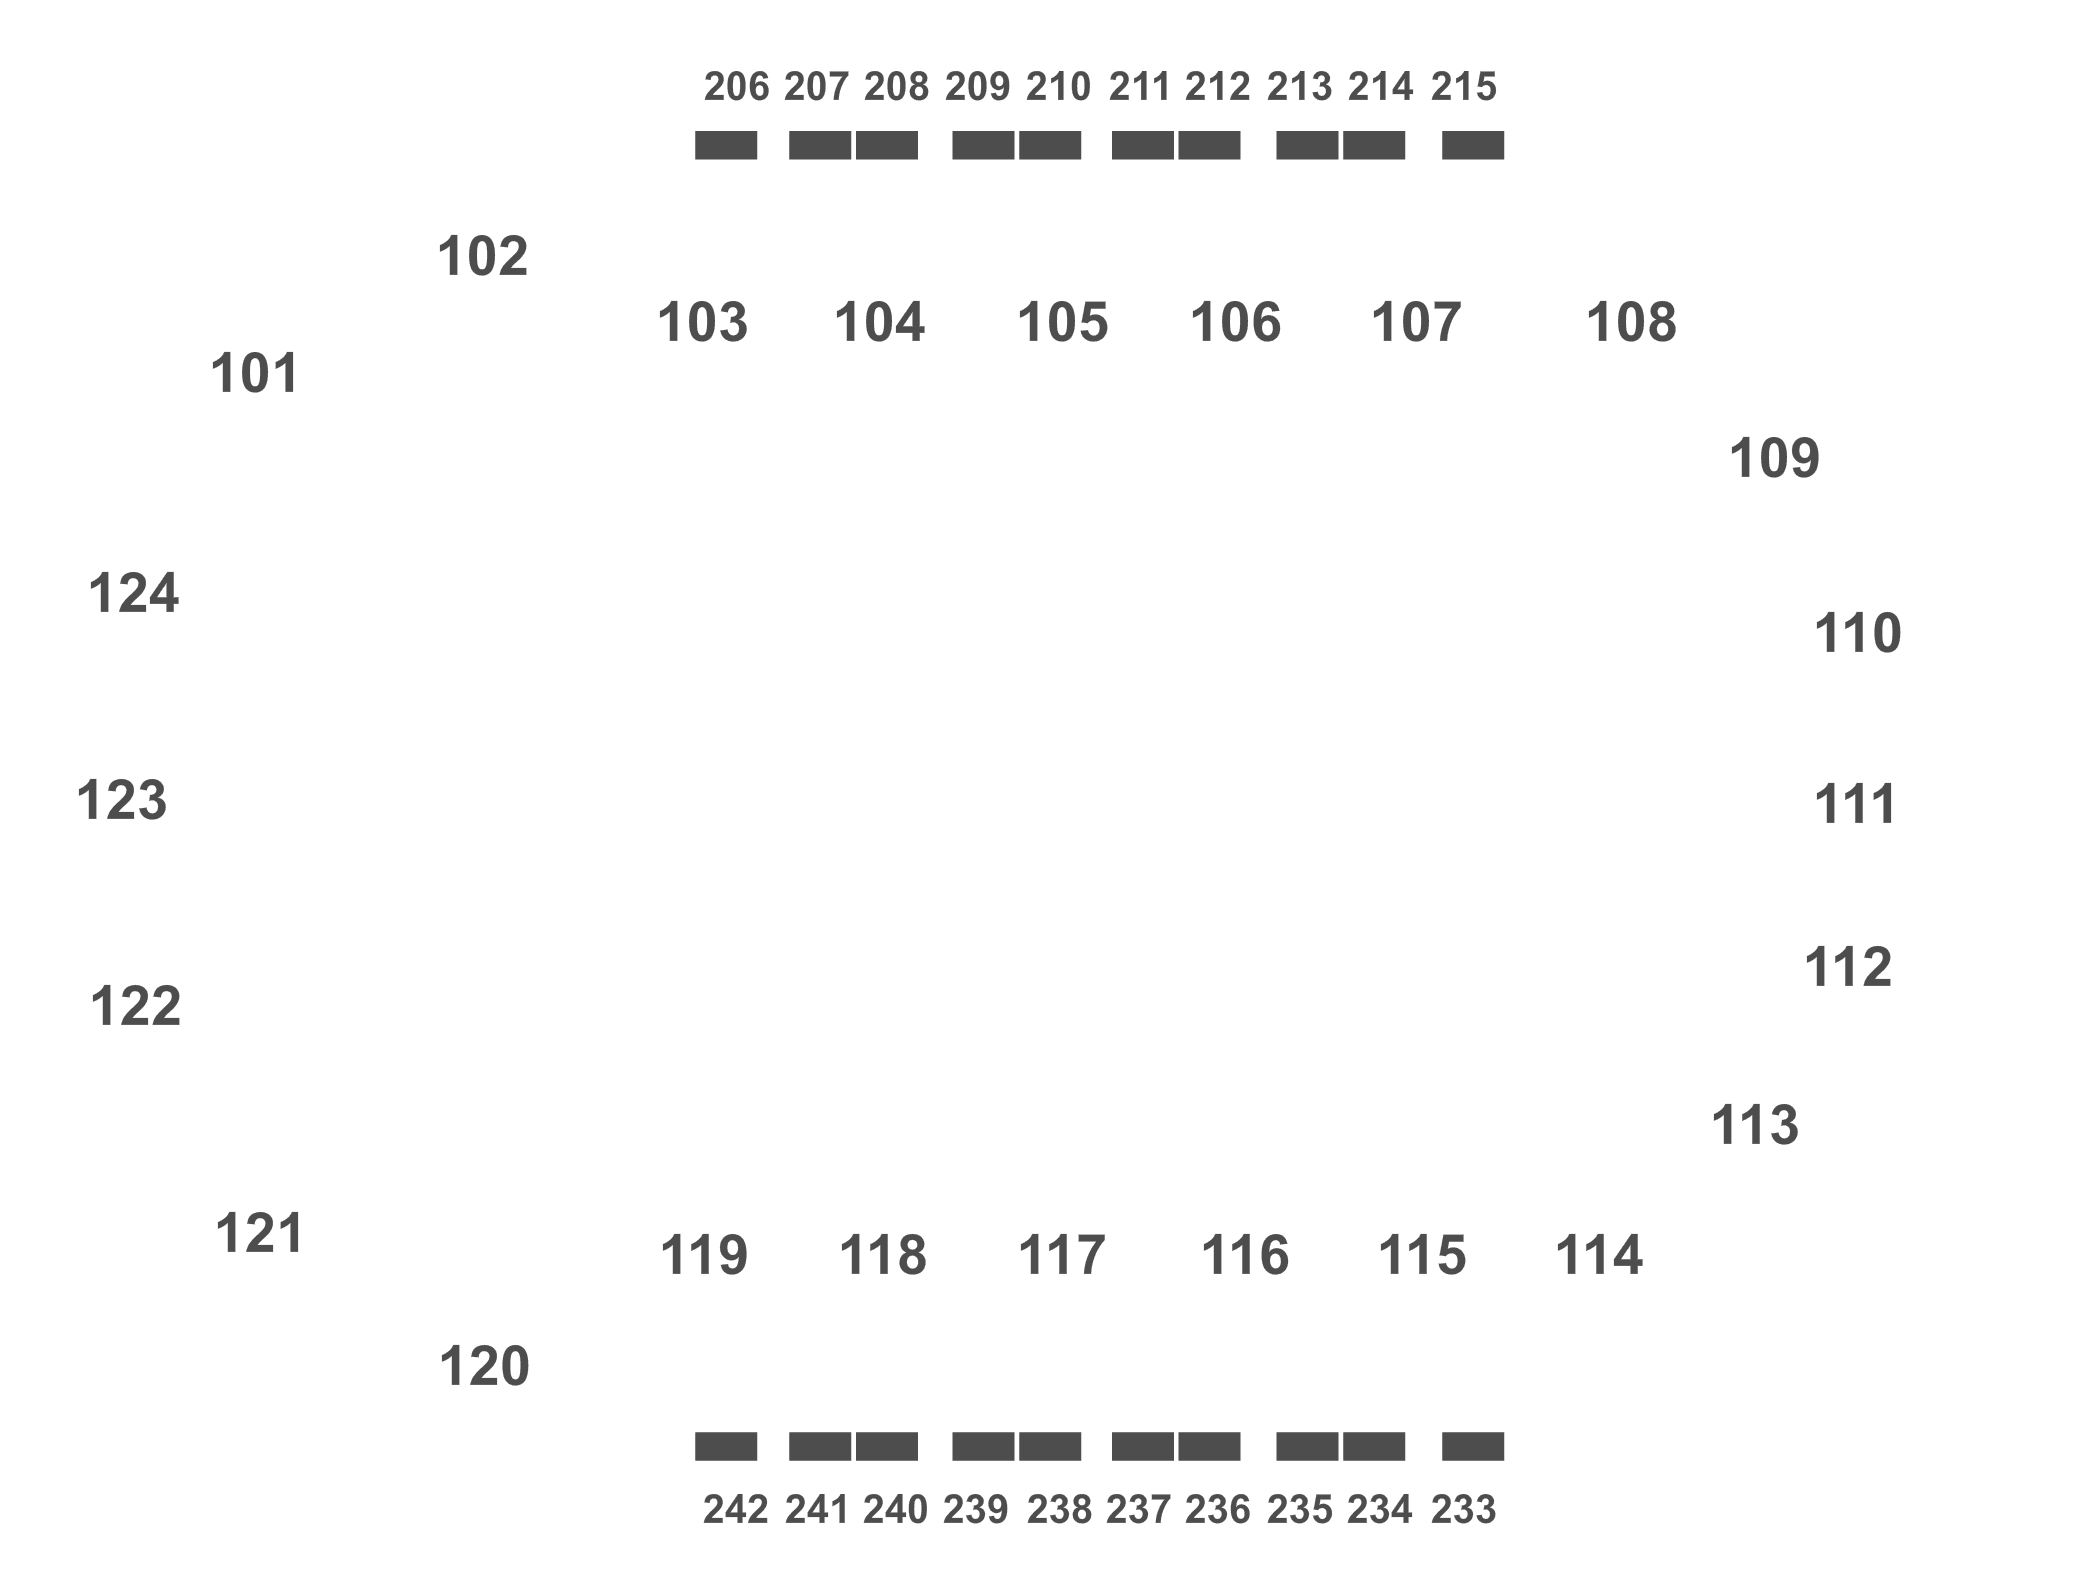 Santander Arena Floor Seating Chart